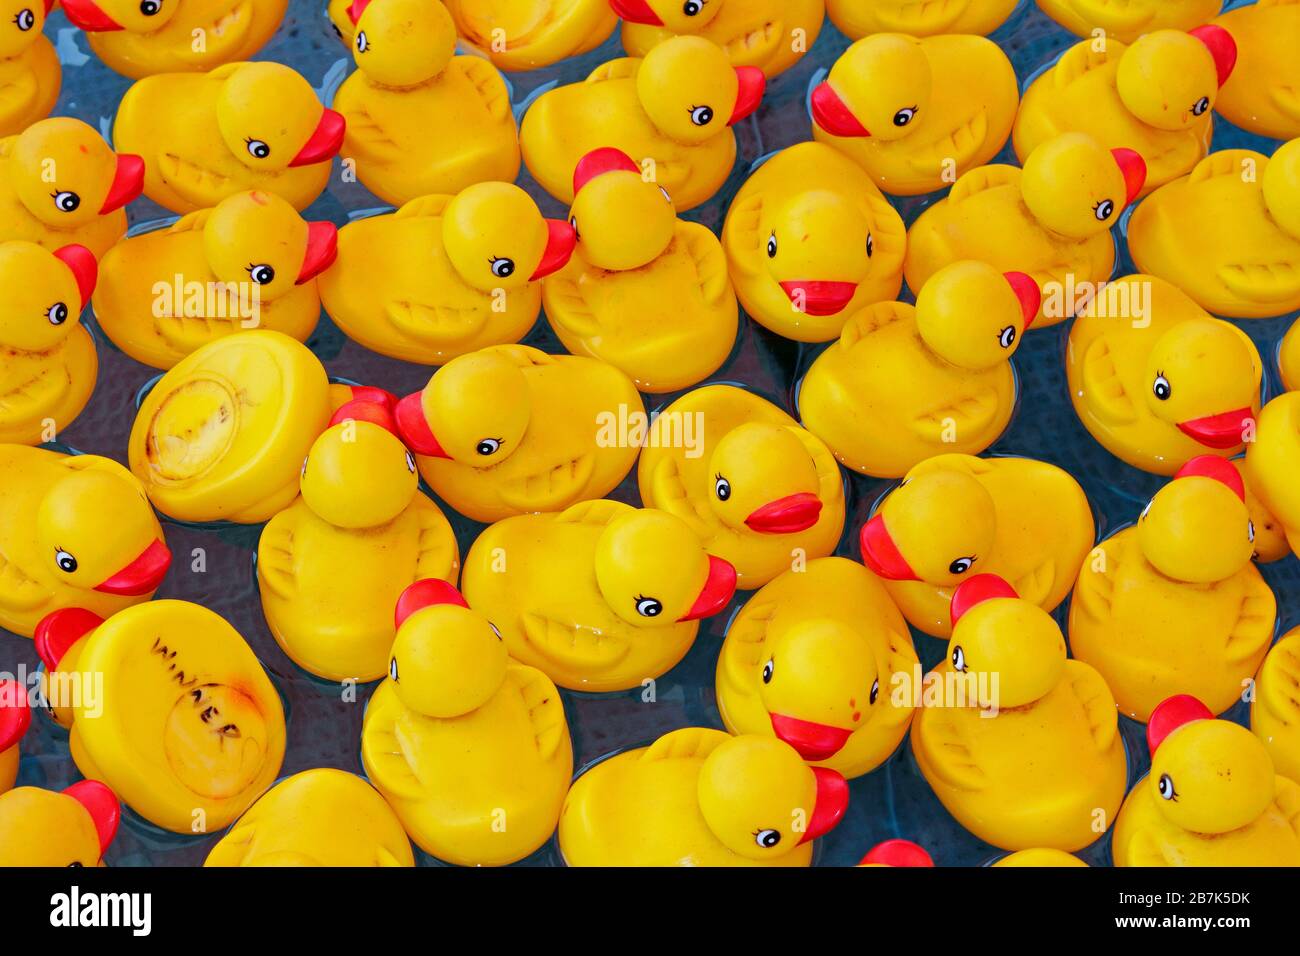 yellow rubber duckies Stock Photo